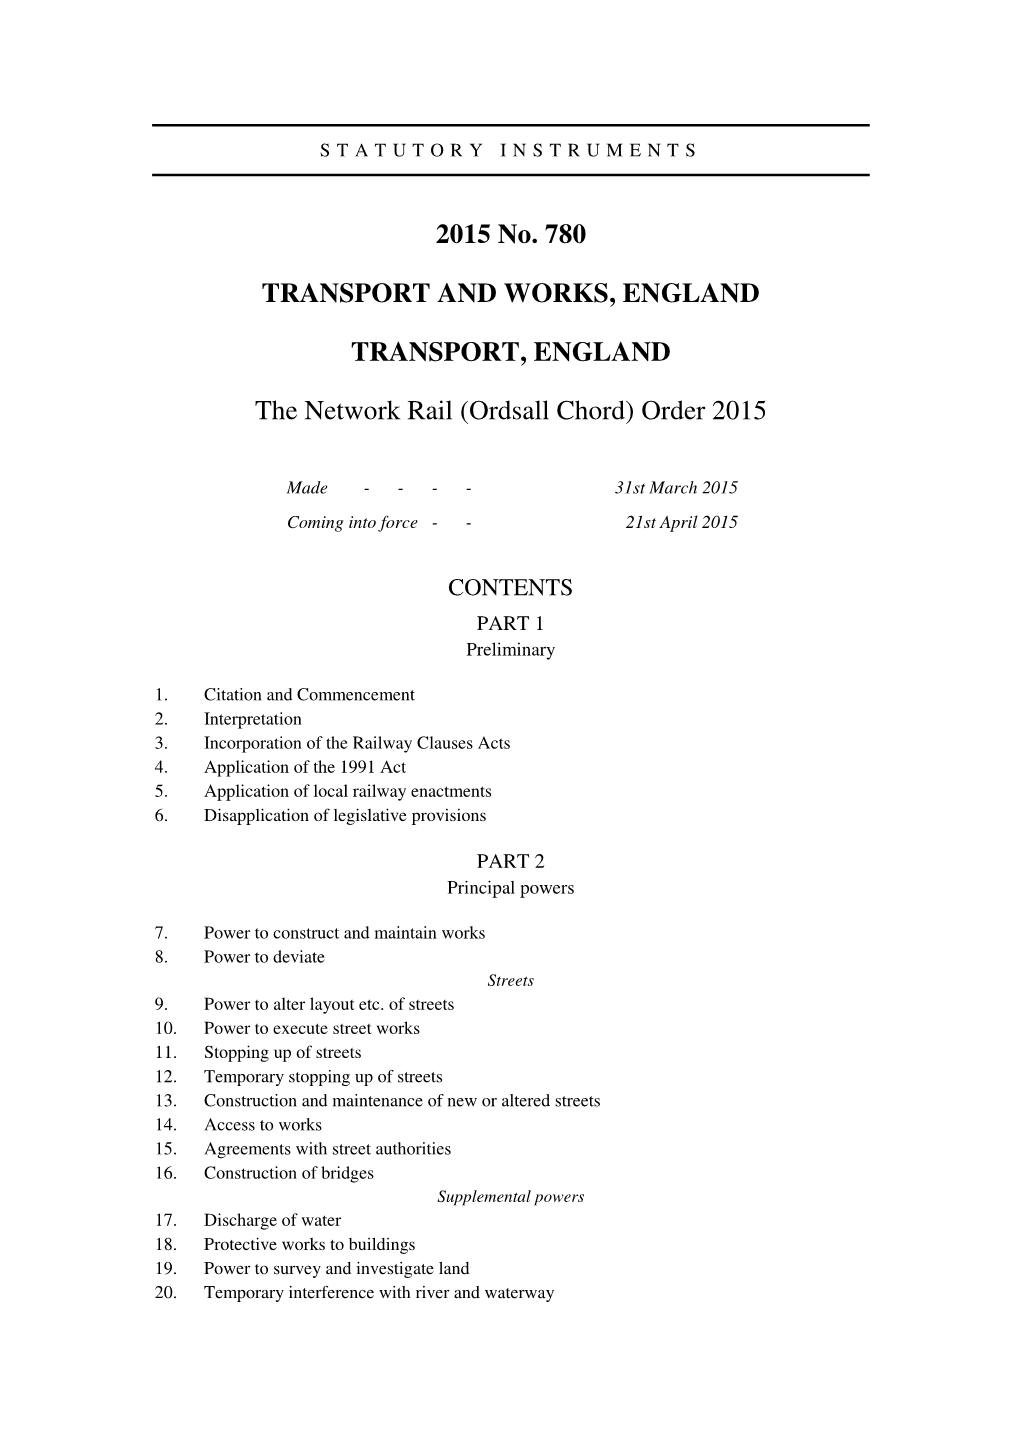 The Network Rail (Ordsall Chord) Order 2015